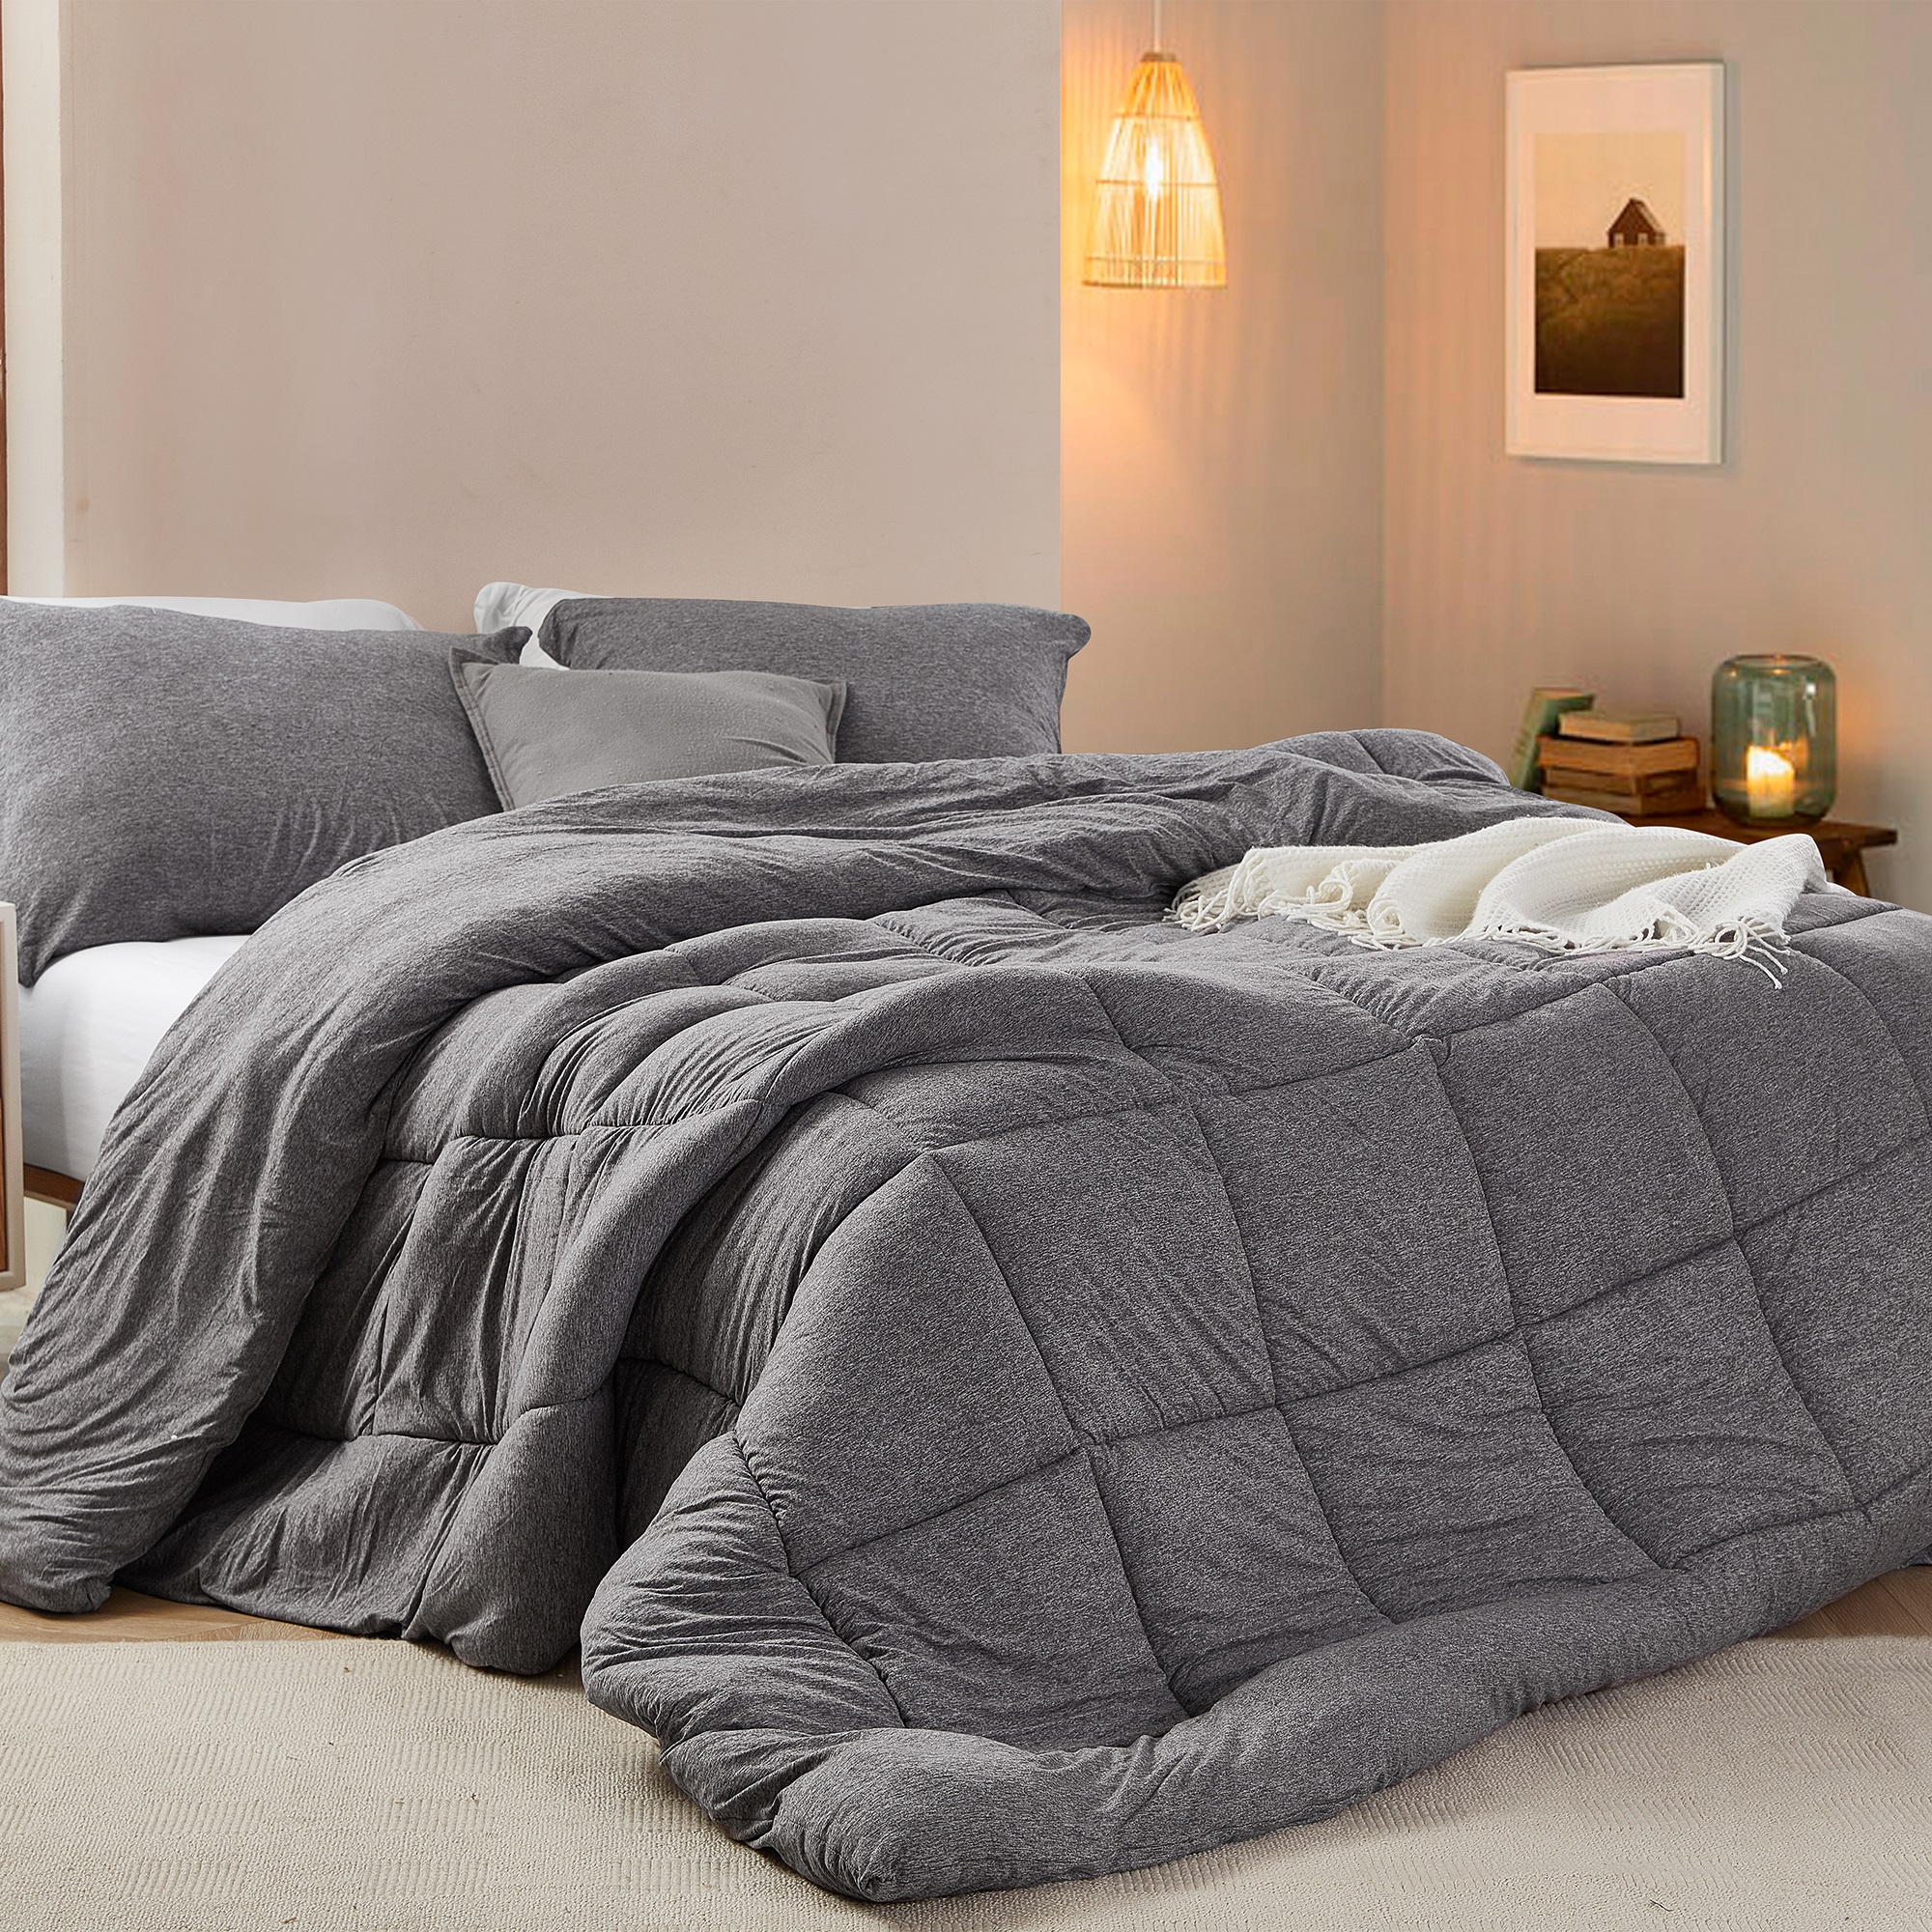 Summertime - Coma Inducer Oversized Comforter - Black & Gray